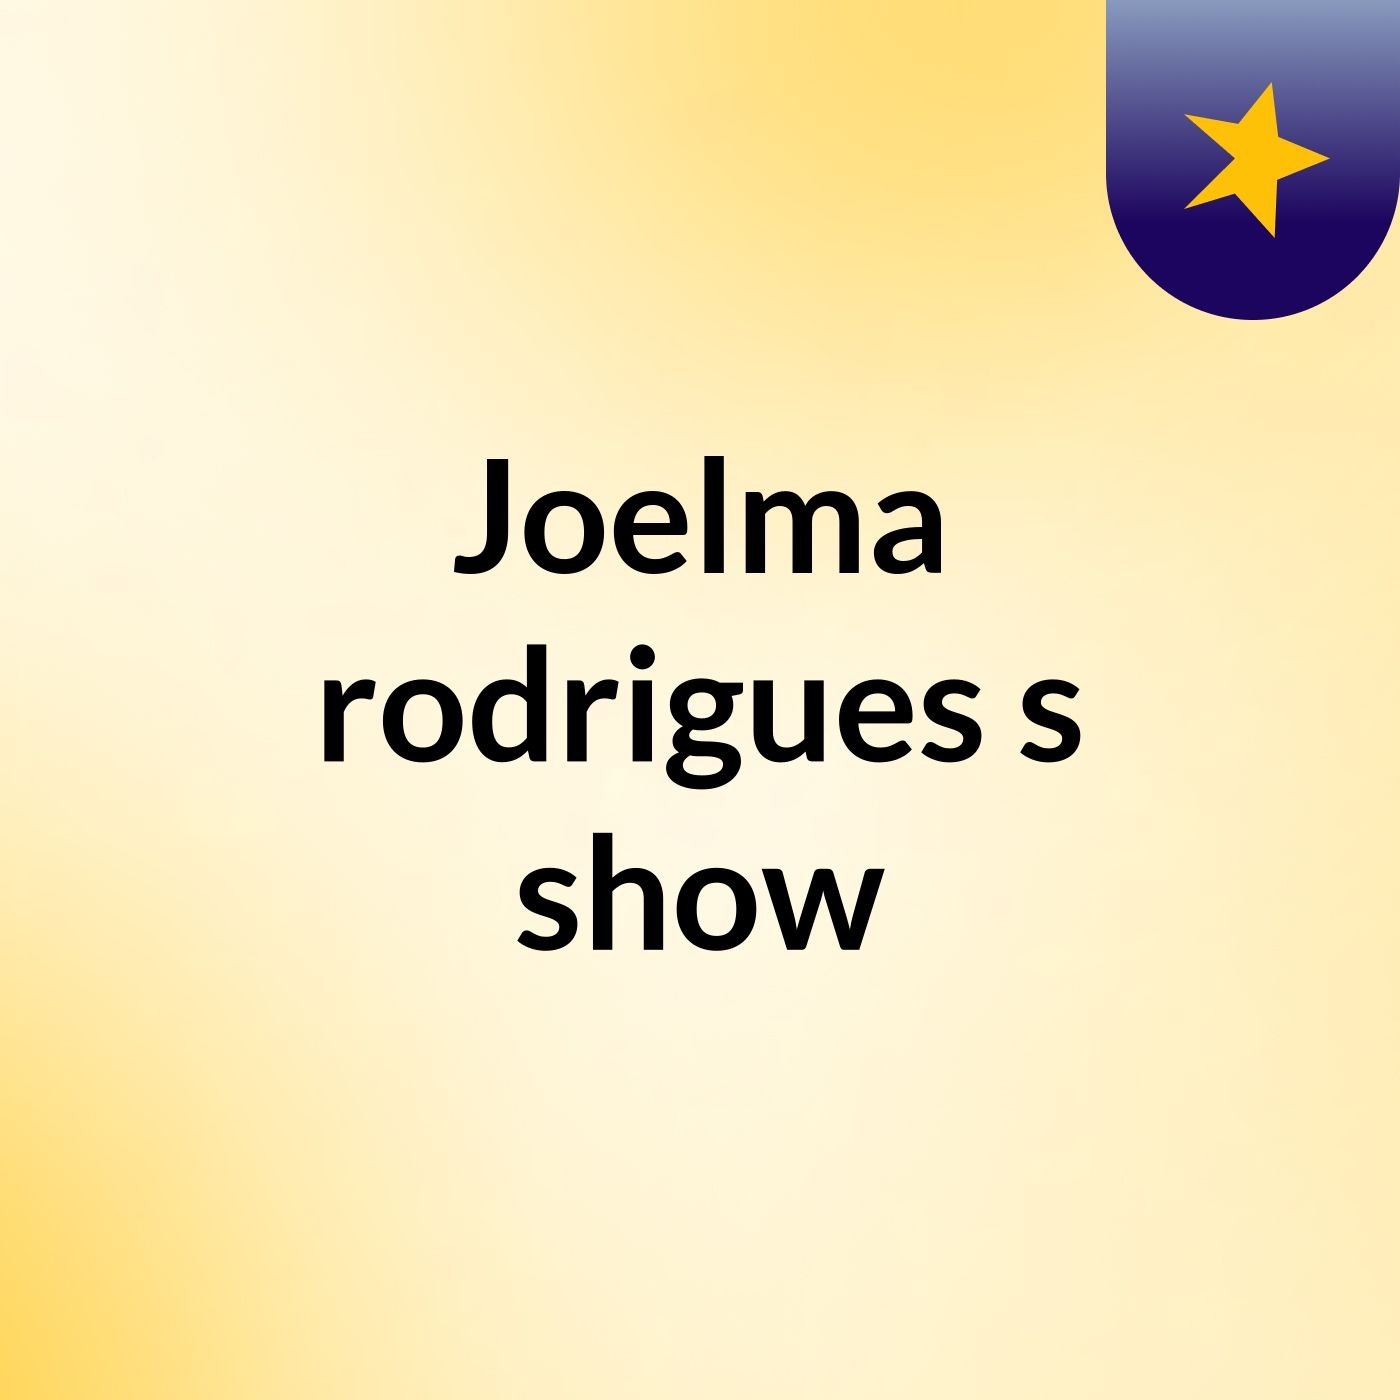 Joelma rodrigues's show